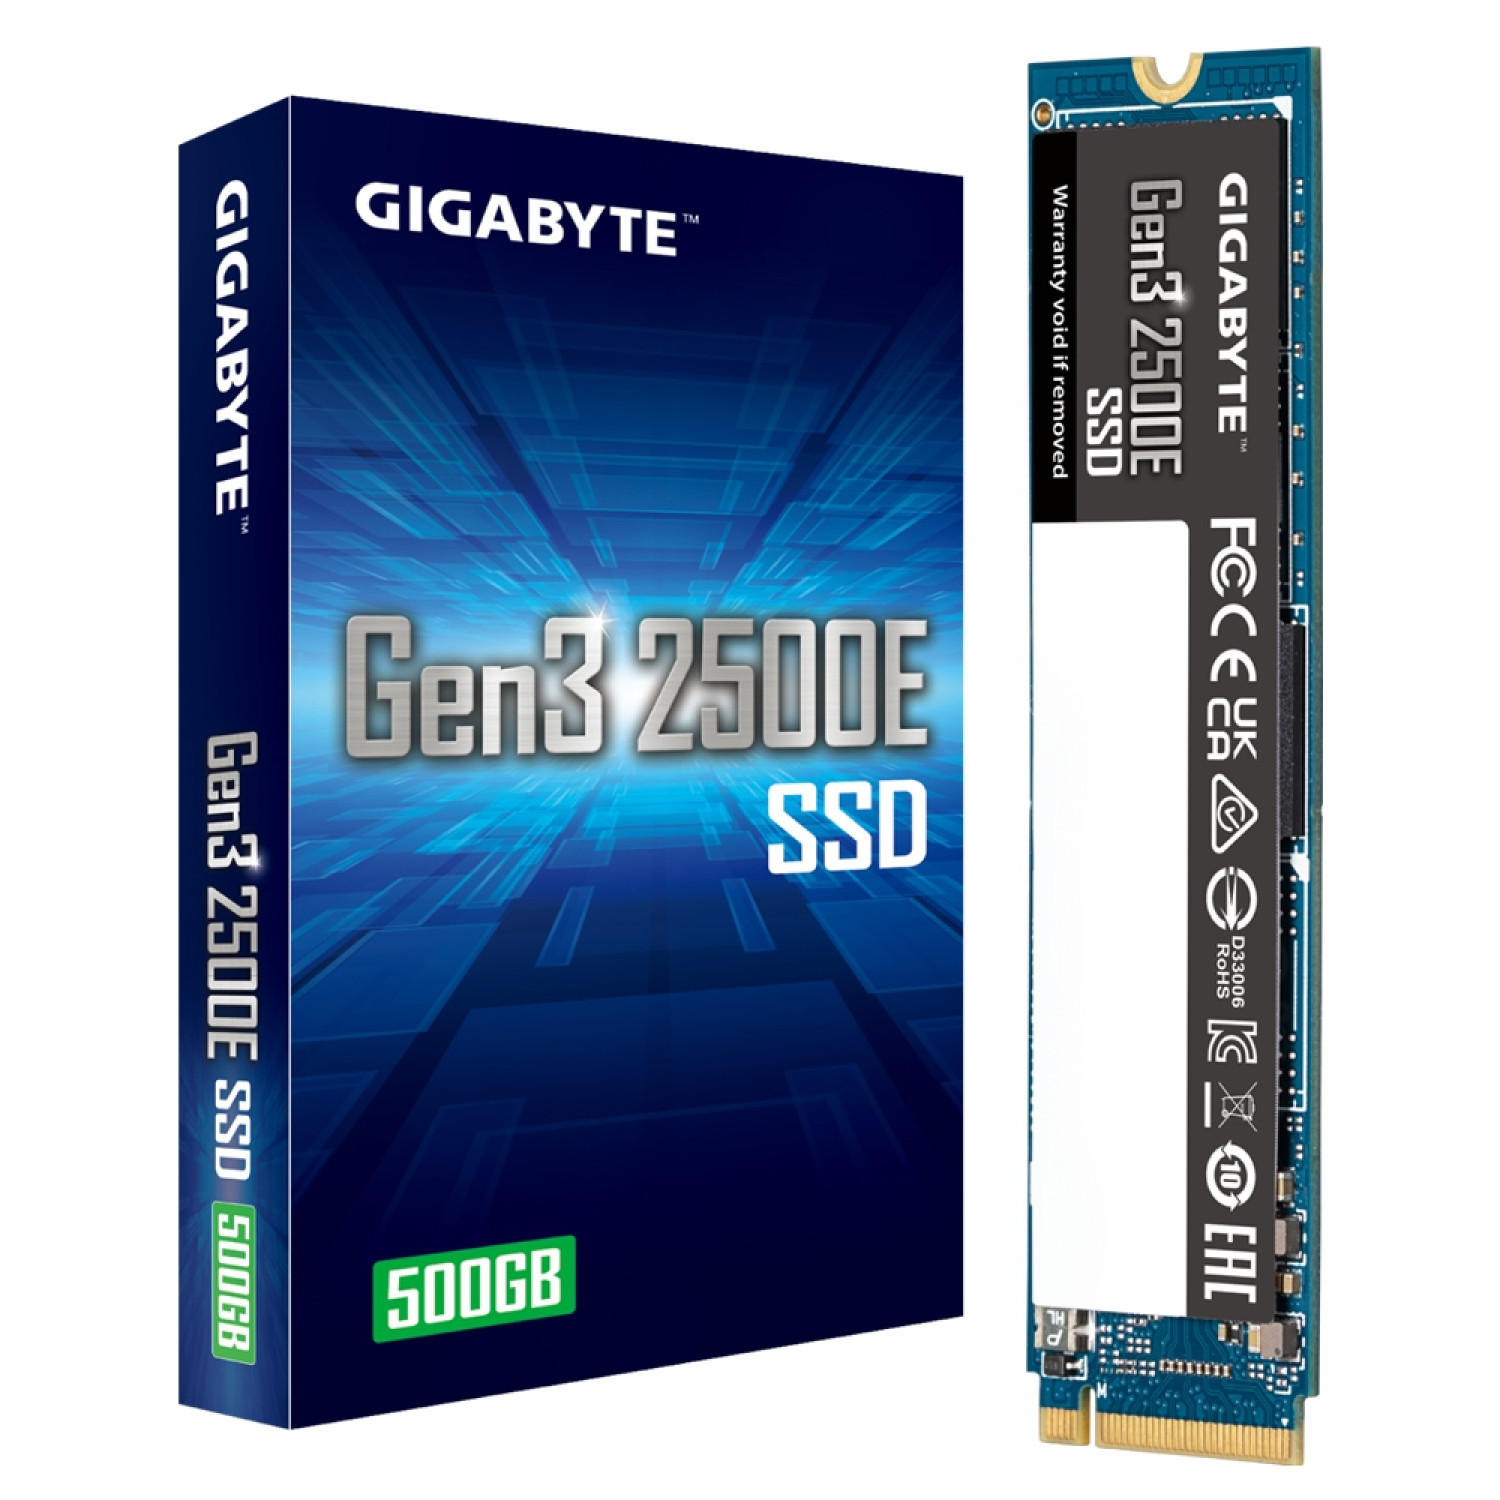 حافظه اس اس دی Gigabyte Gen3 2500E 500GB-5